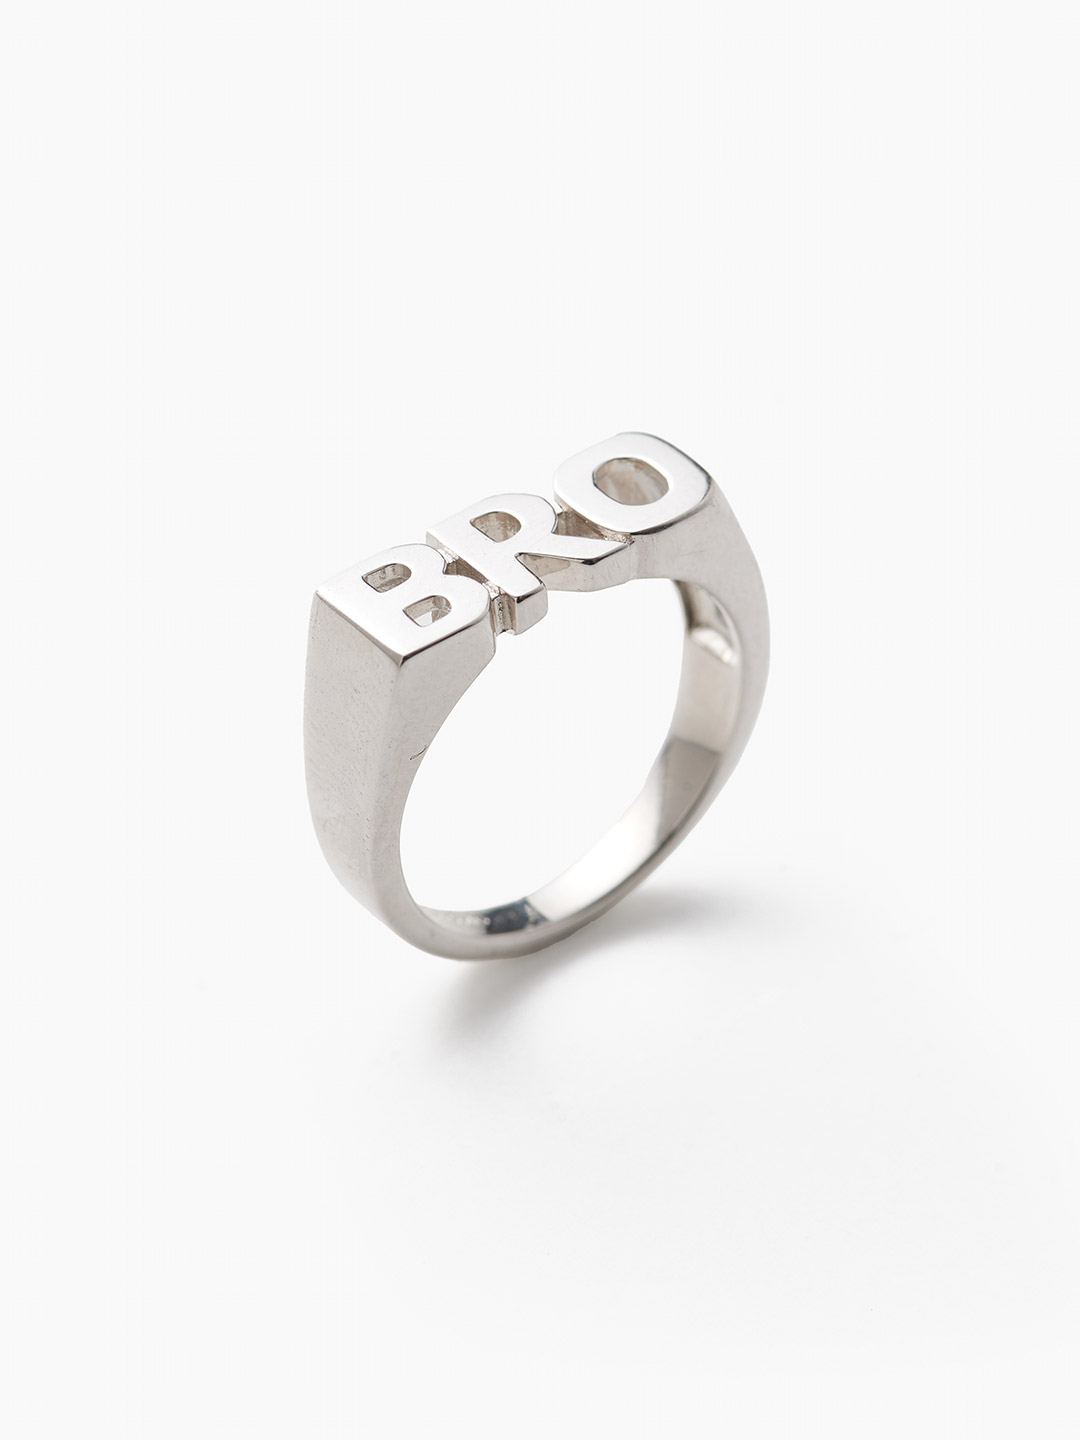 BRO Ring Silver - Silver